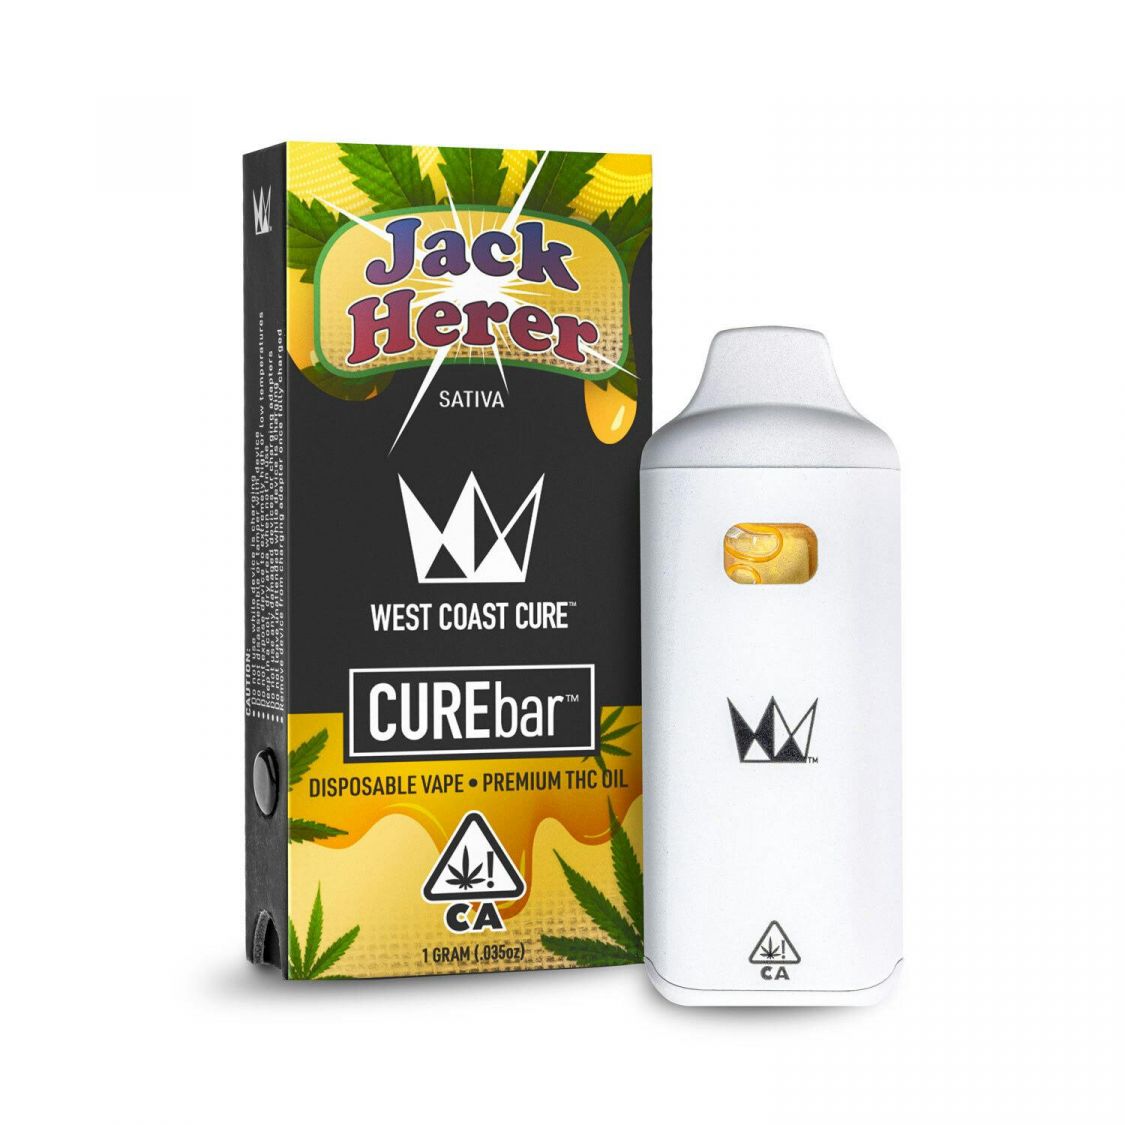 West Coast Cure Jack Herer CUREbar Disposable Vaporizers Disposable